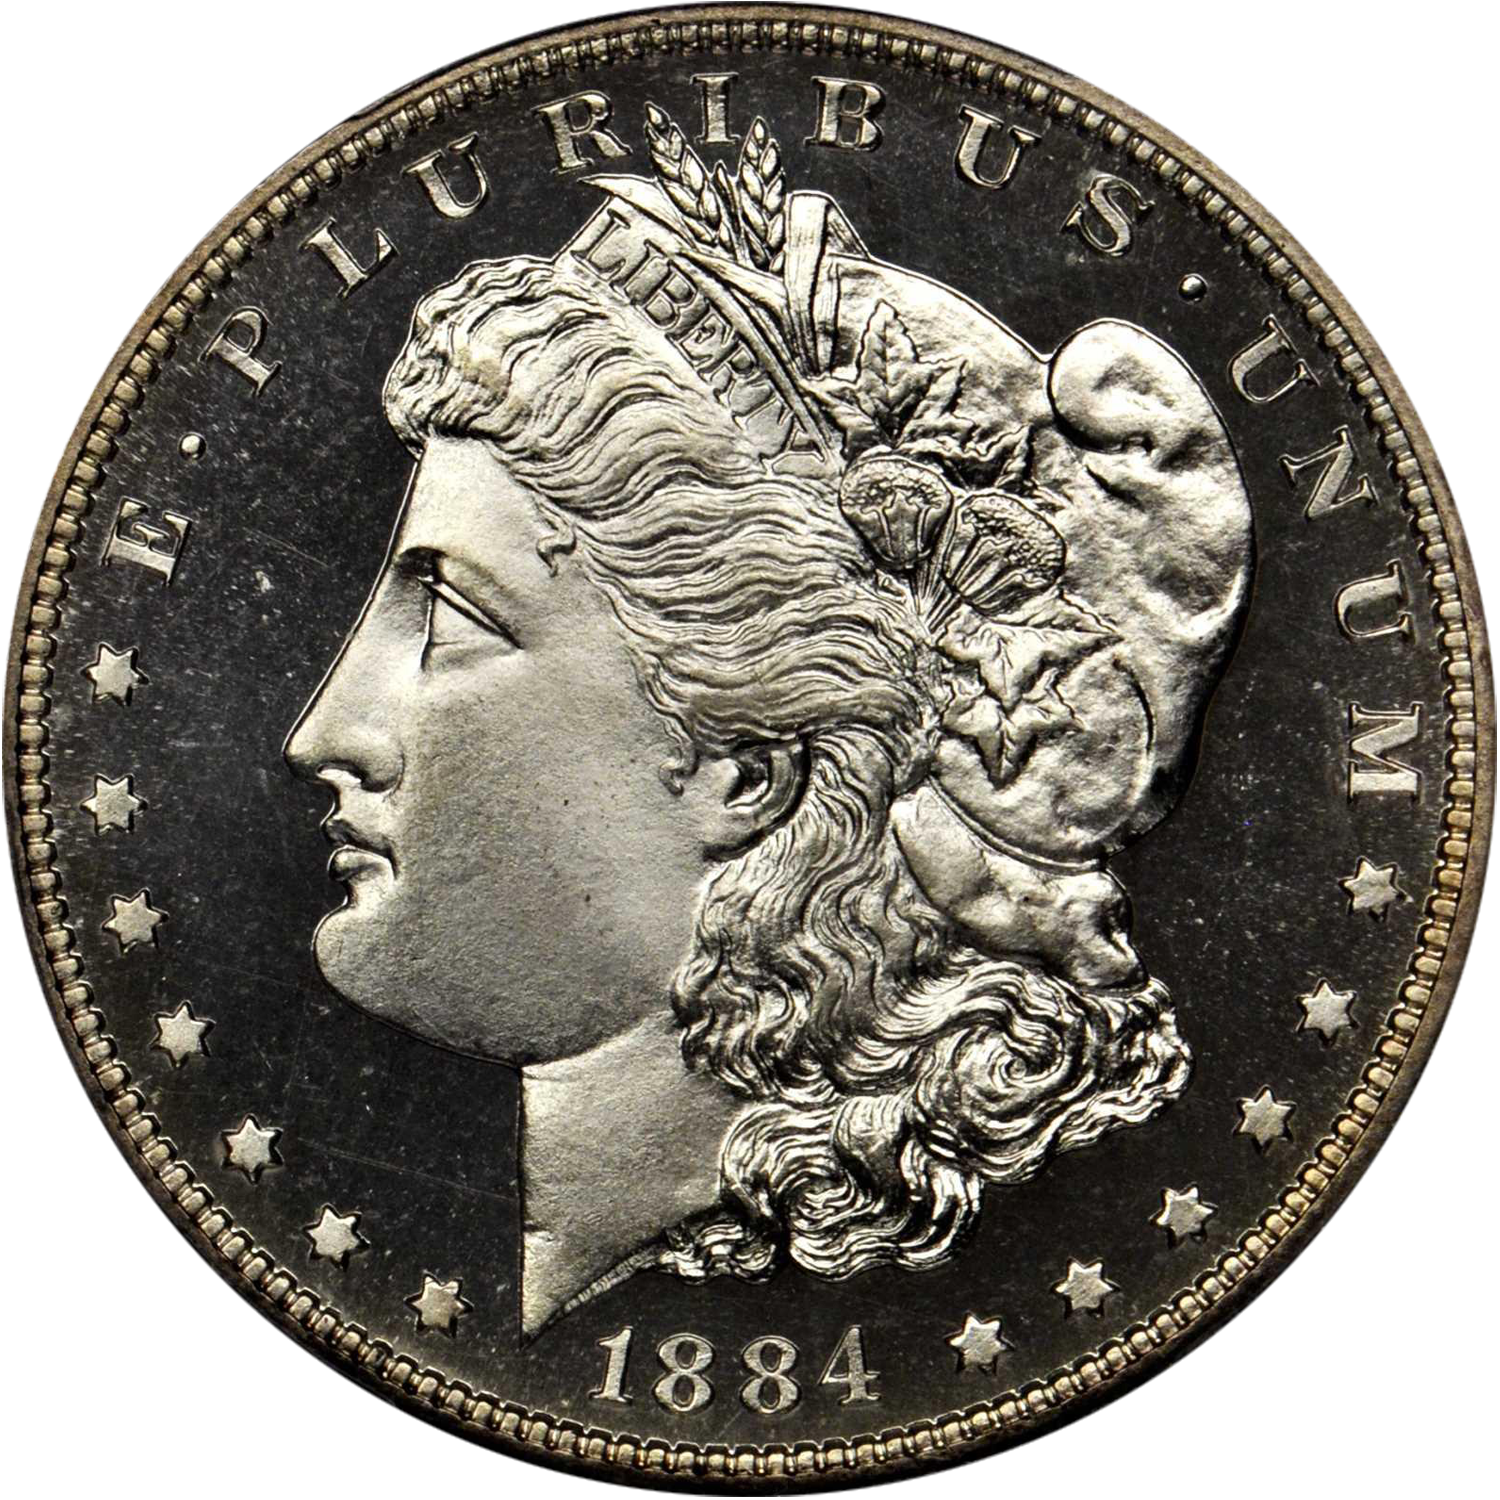 1884 proof morgan silver dollar